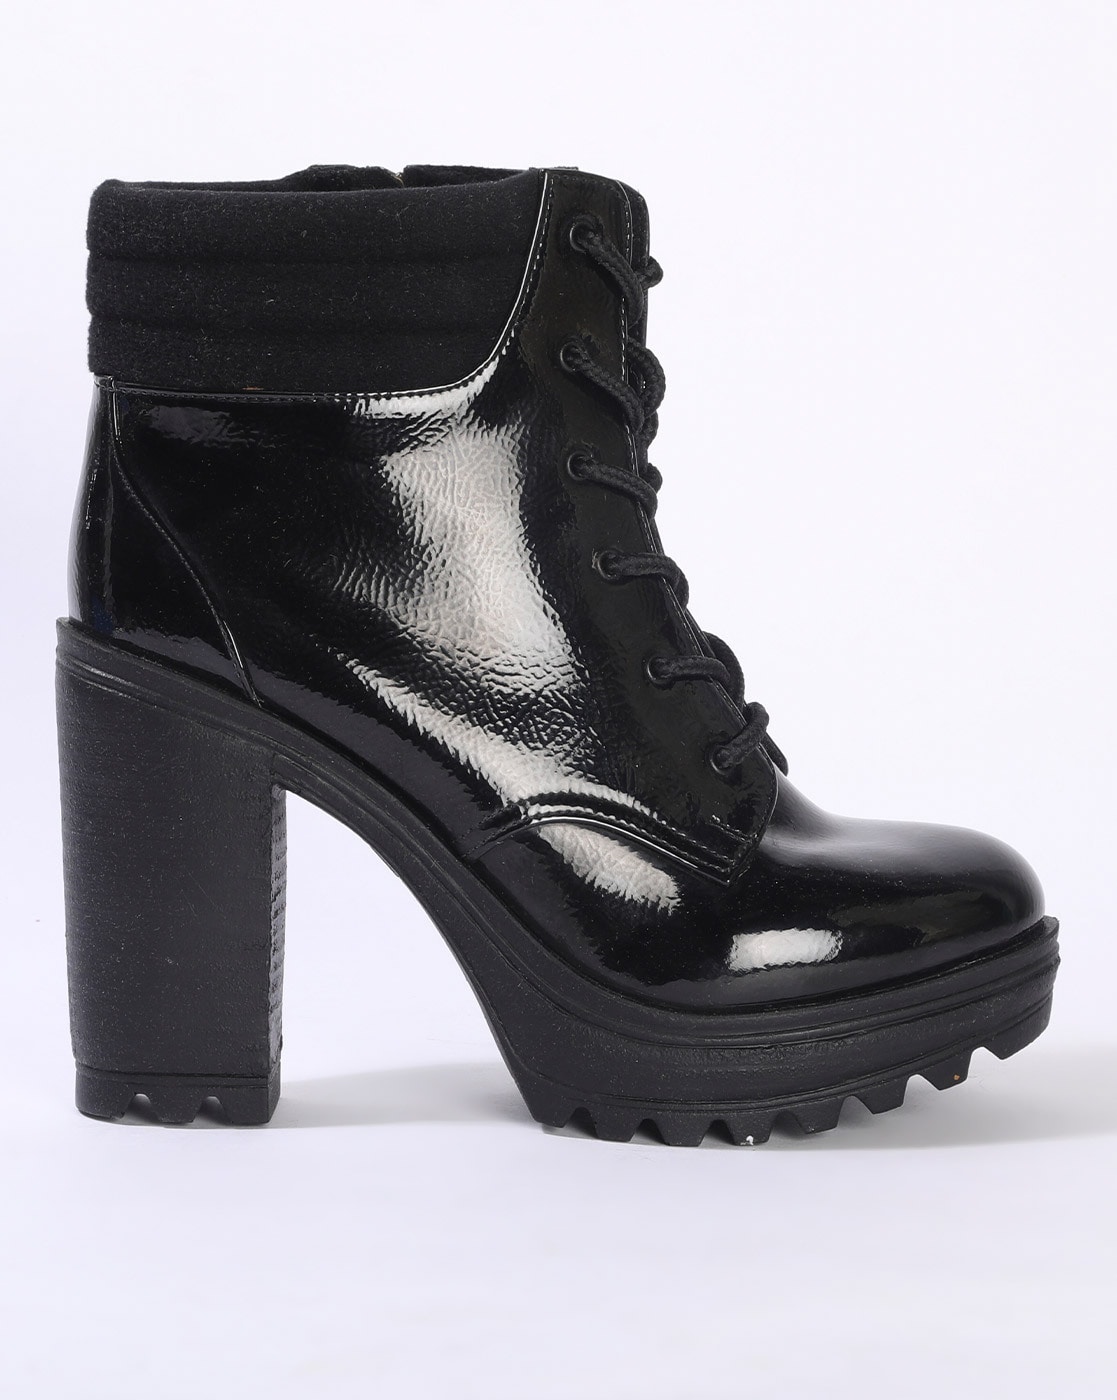 Buy Catwalk Women's Ankle Strap Block Heel Sandals - 9 UK/India (41 EU)  (3628C-9) at Amazon.in